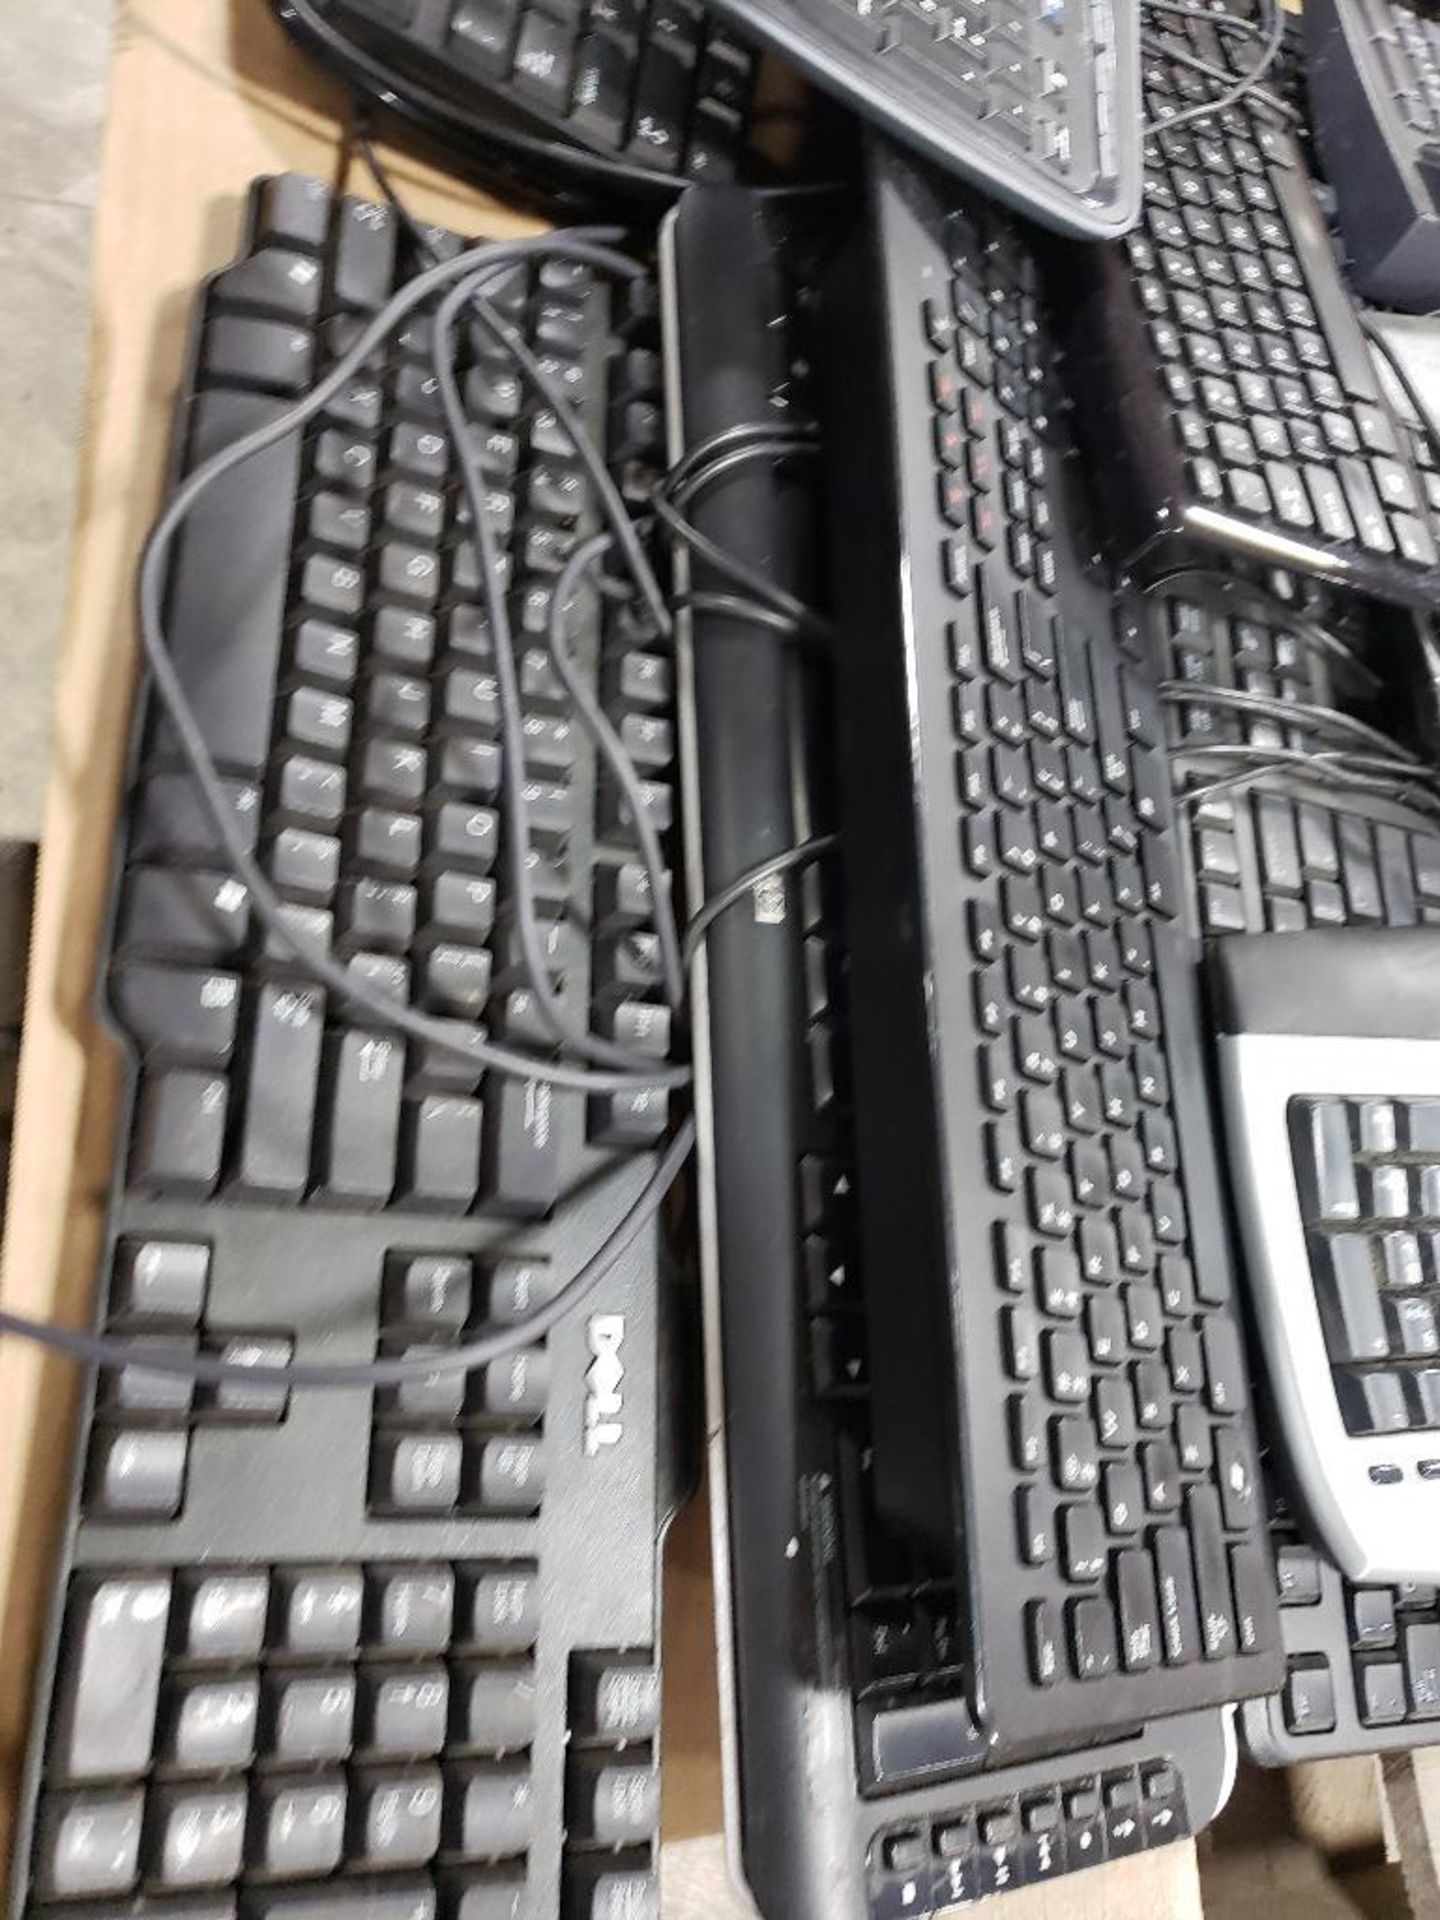 Large assortment of keyboards. - Image 6 of 7